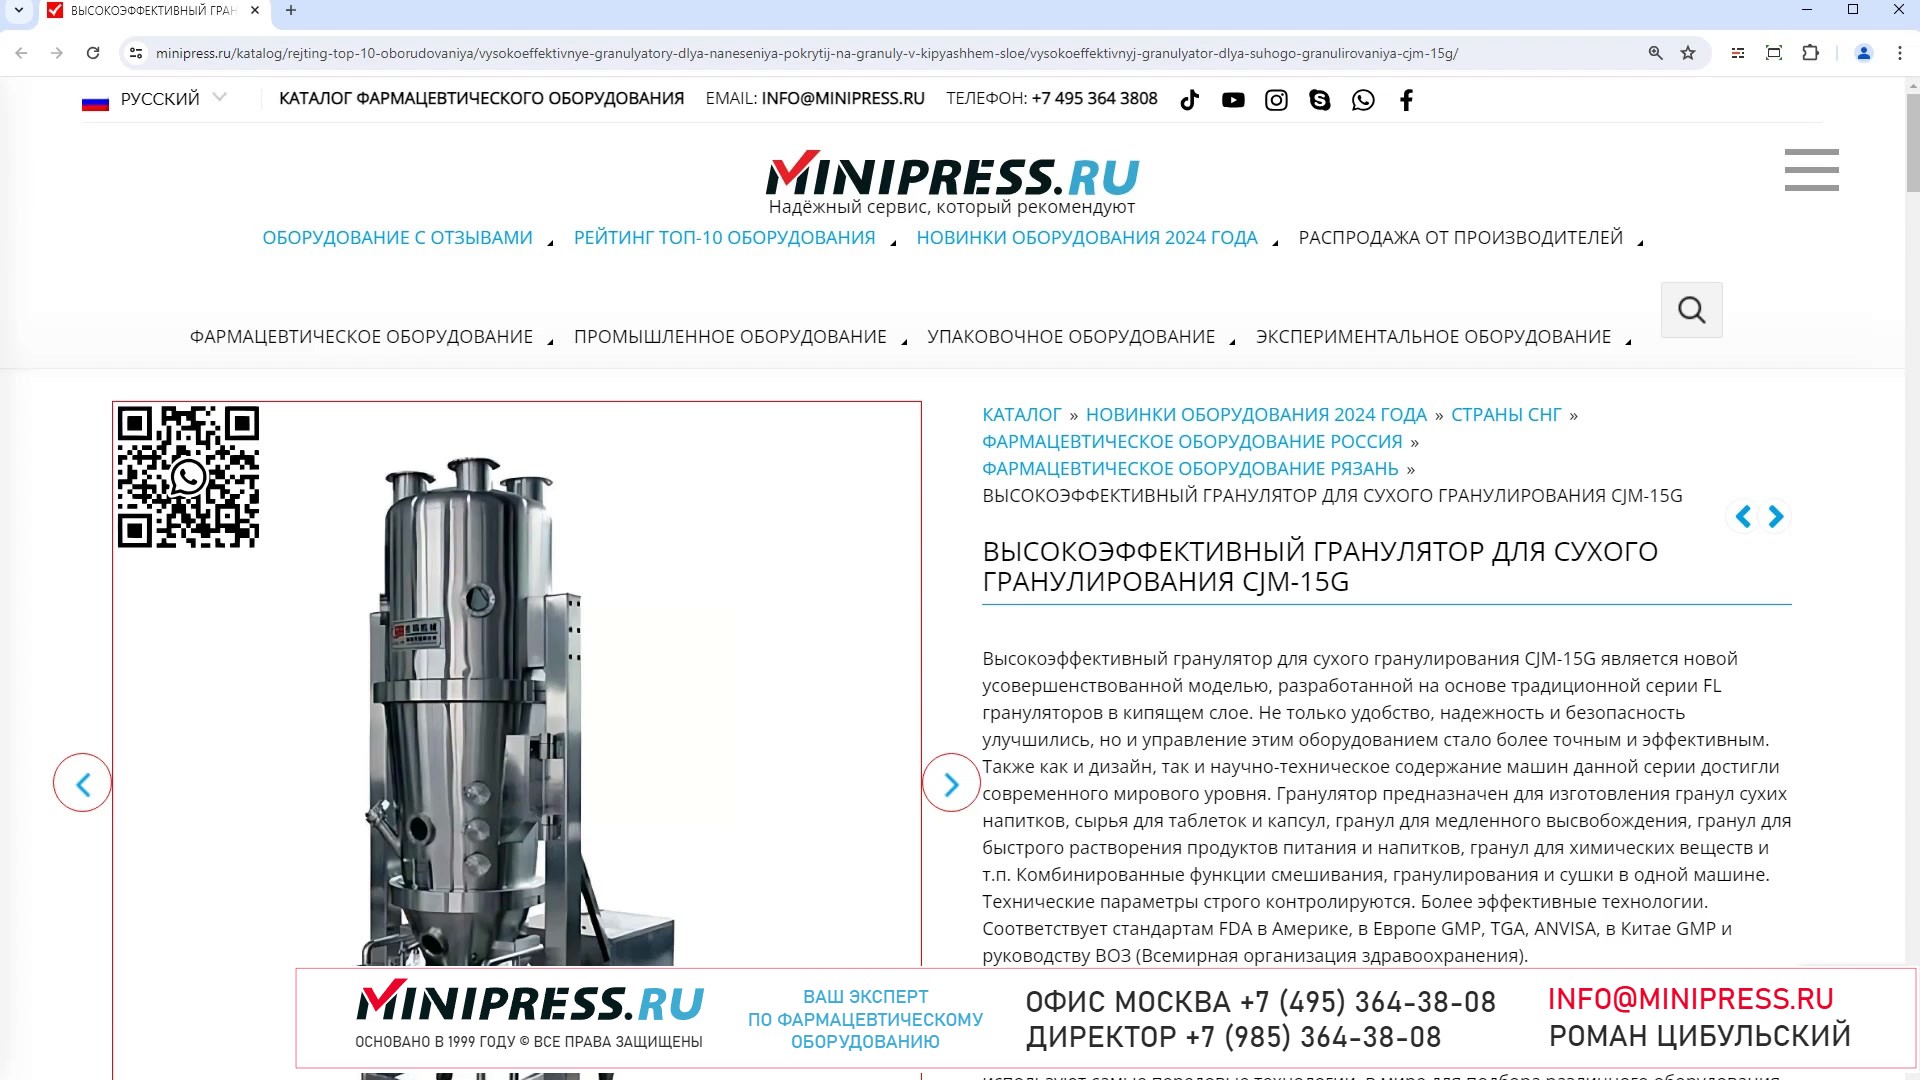 Minipress.ru Высокоэффективный гранулятор для сухого гранулирования CJM-15G